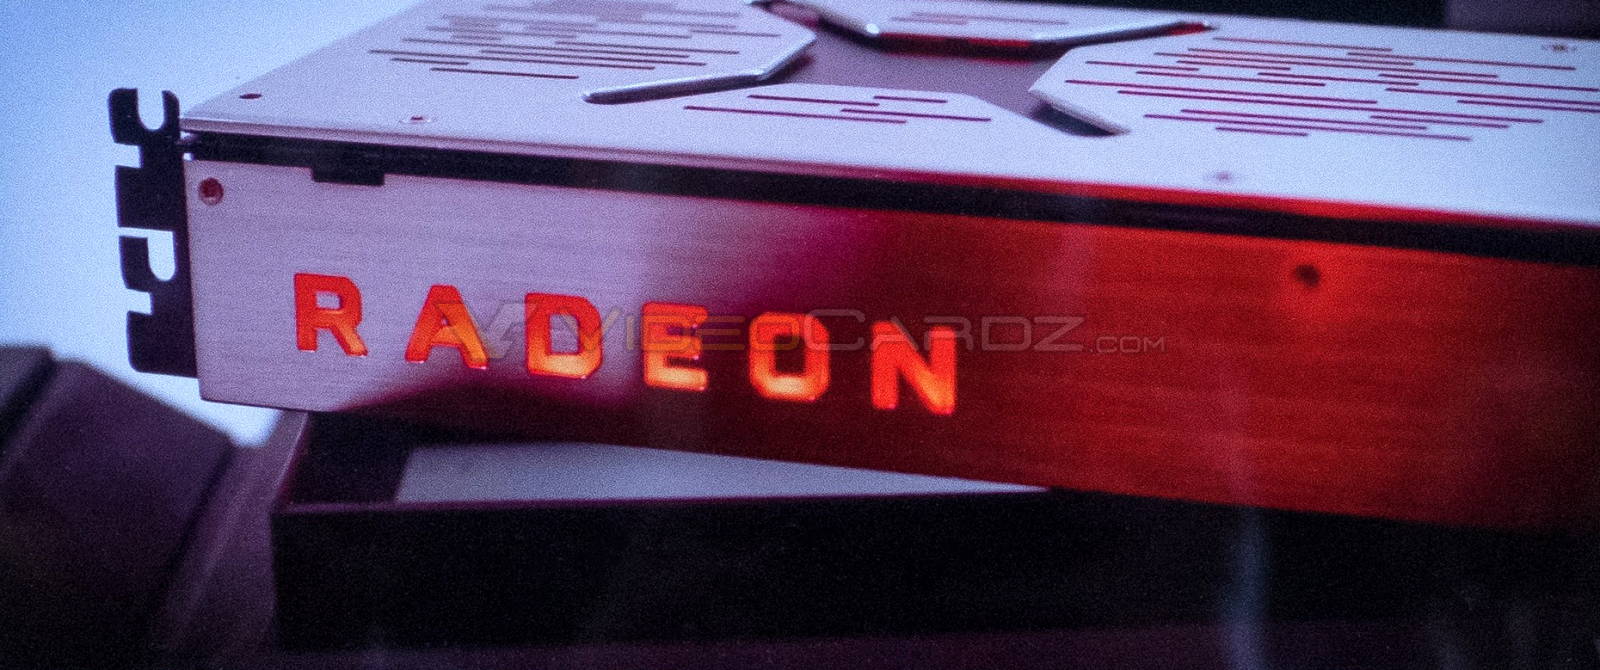 AMD-Radeon-RX-Vega-2-2.jpg